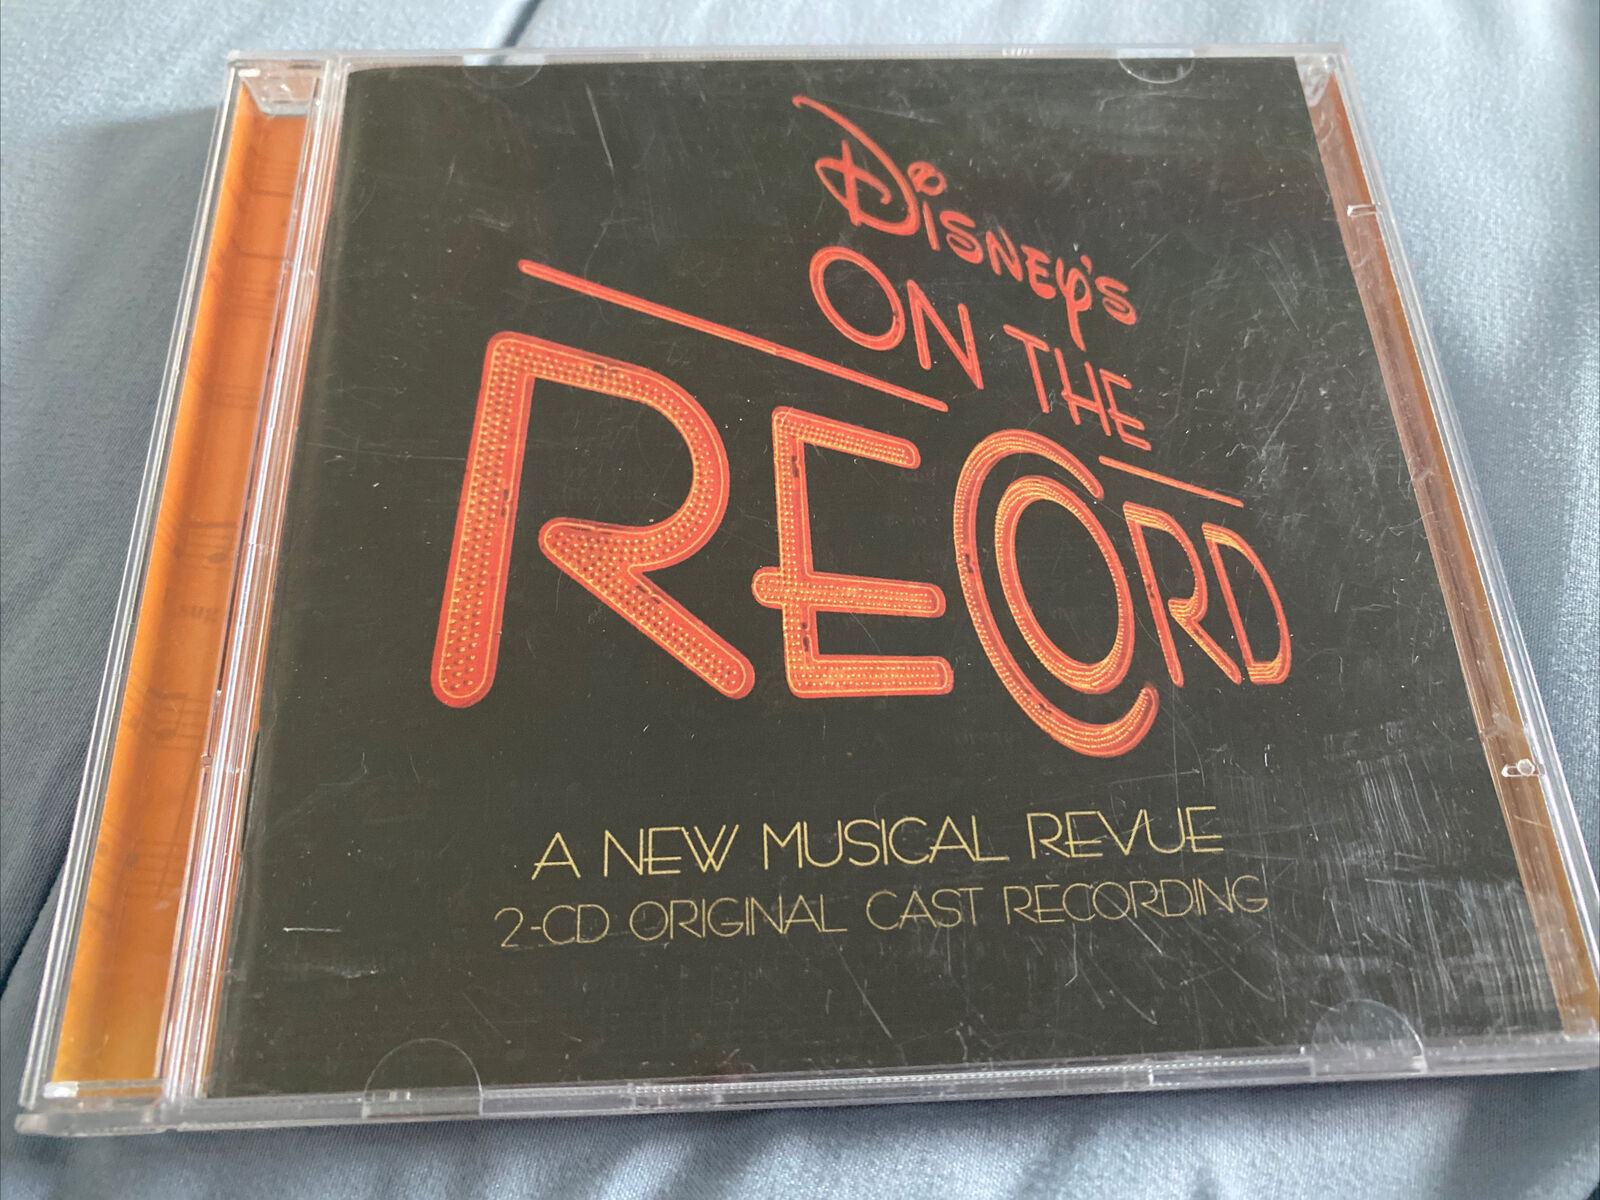 Disney On The Record 2 CD Original Cast Recording